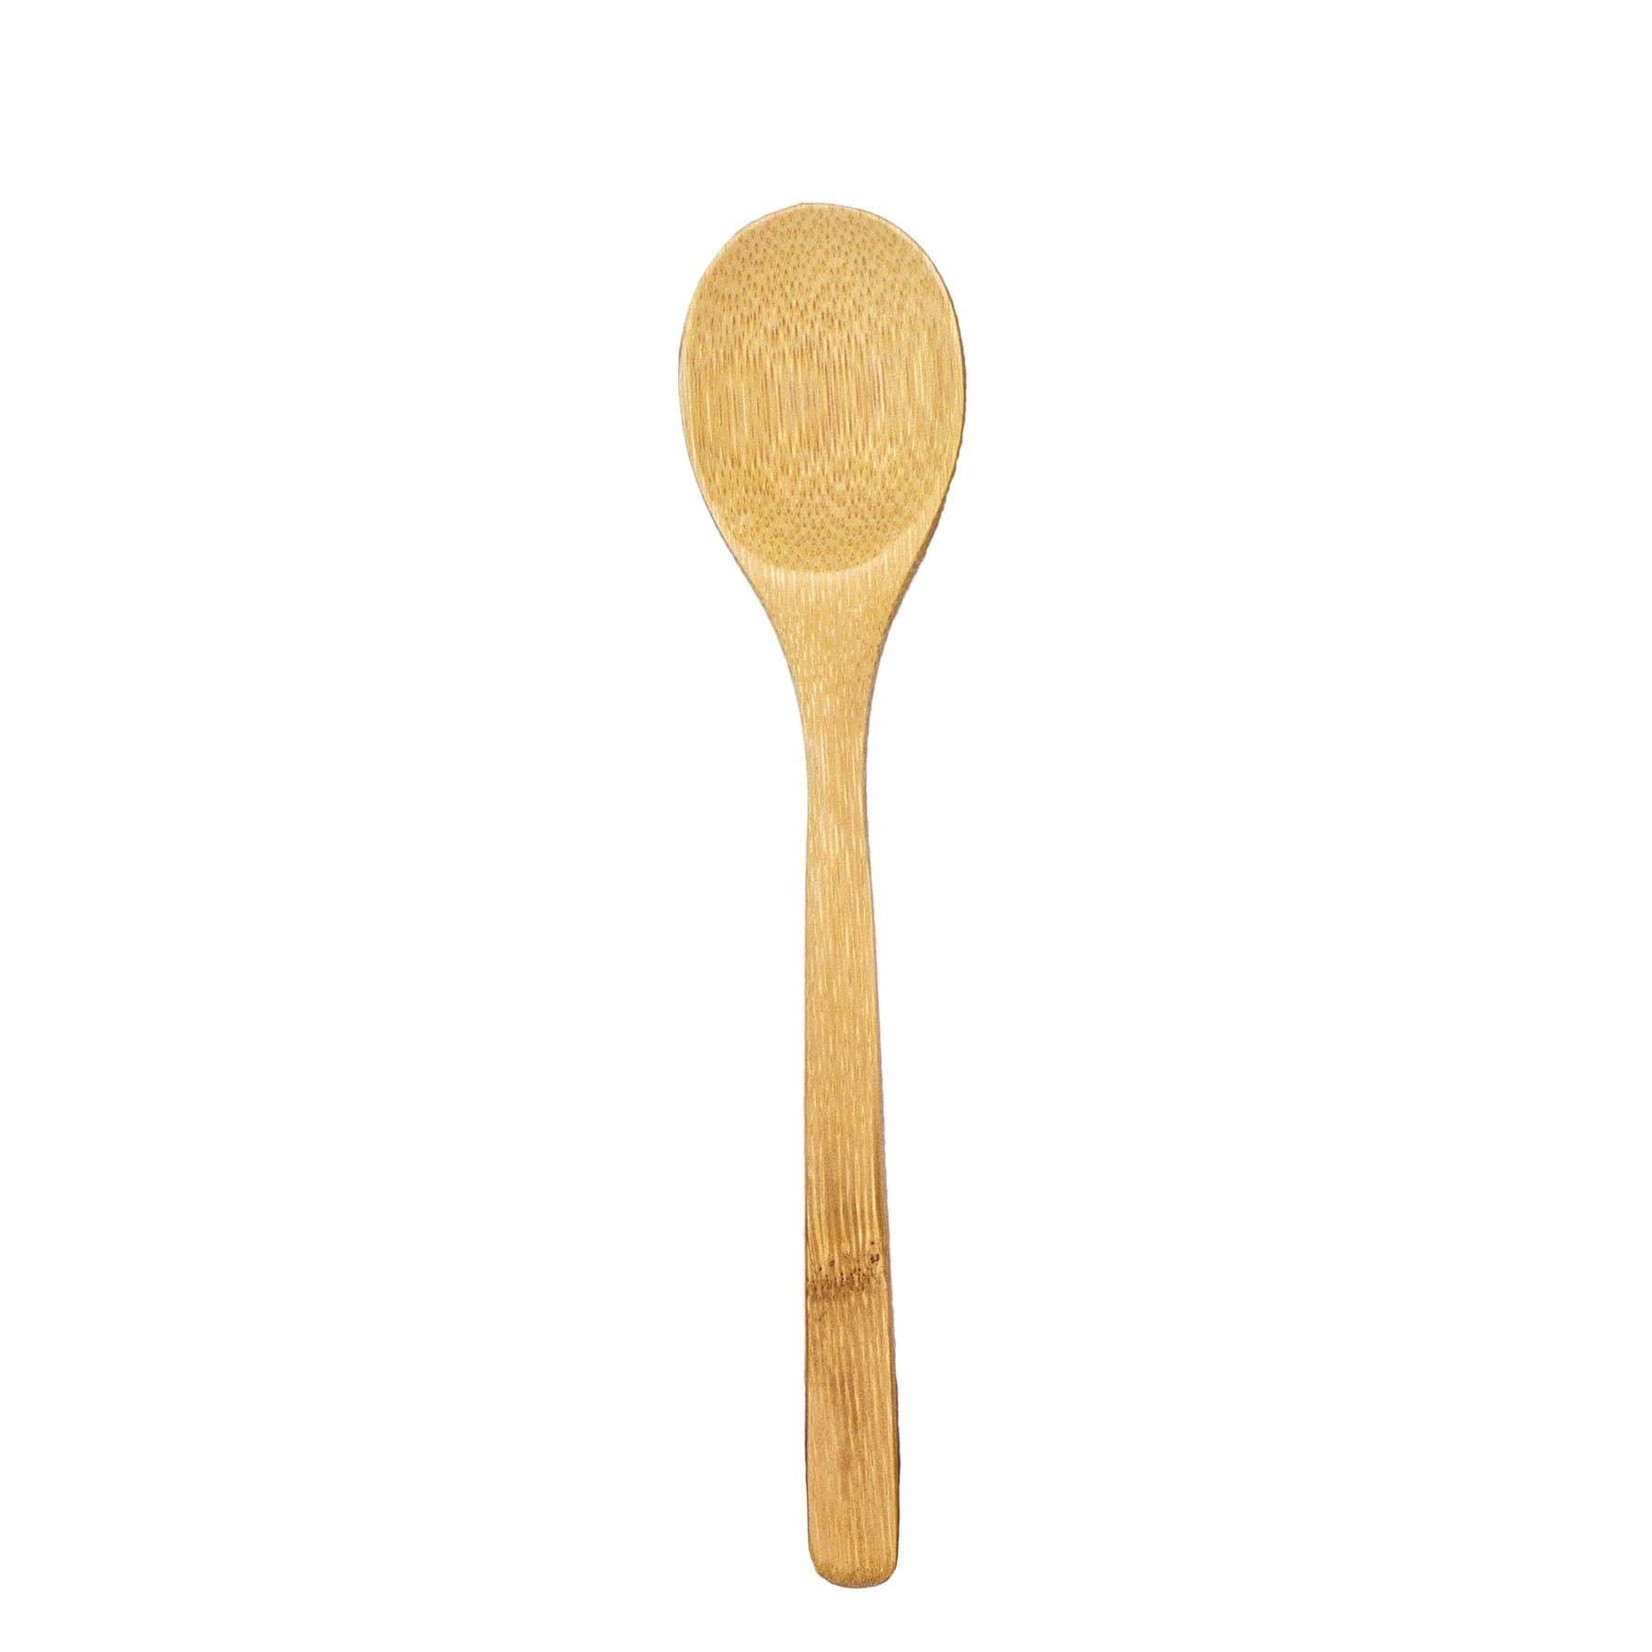 TOTALLY BAMBOO TOTALLY BAMBOO Bamboo Spoon